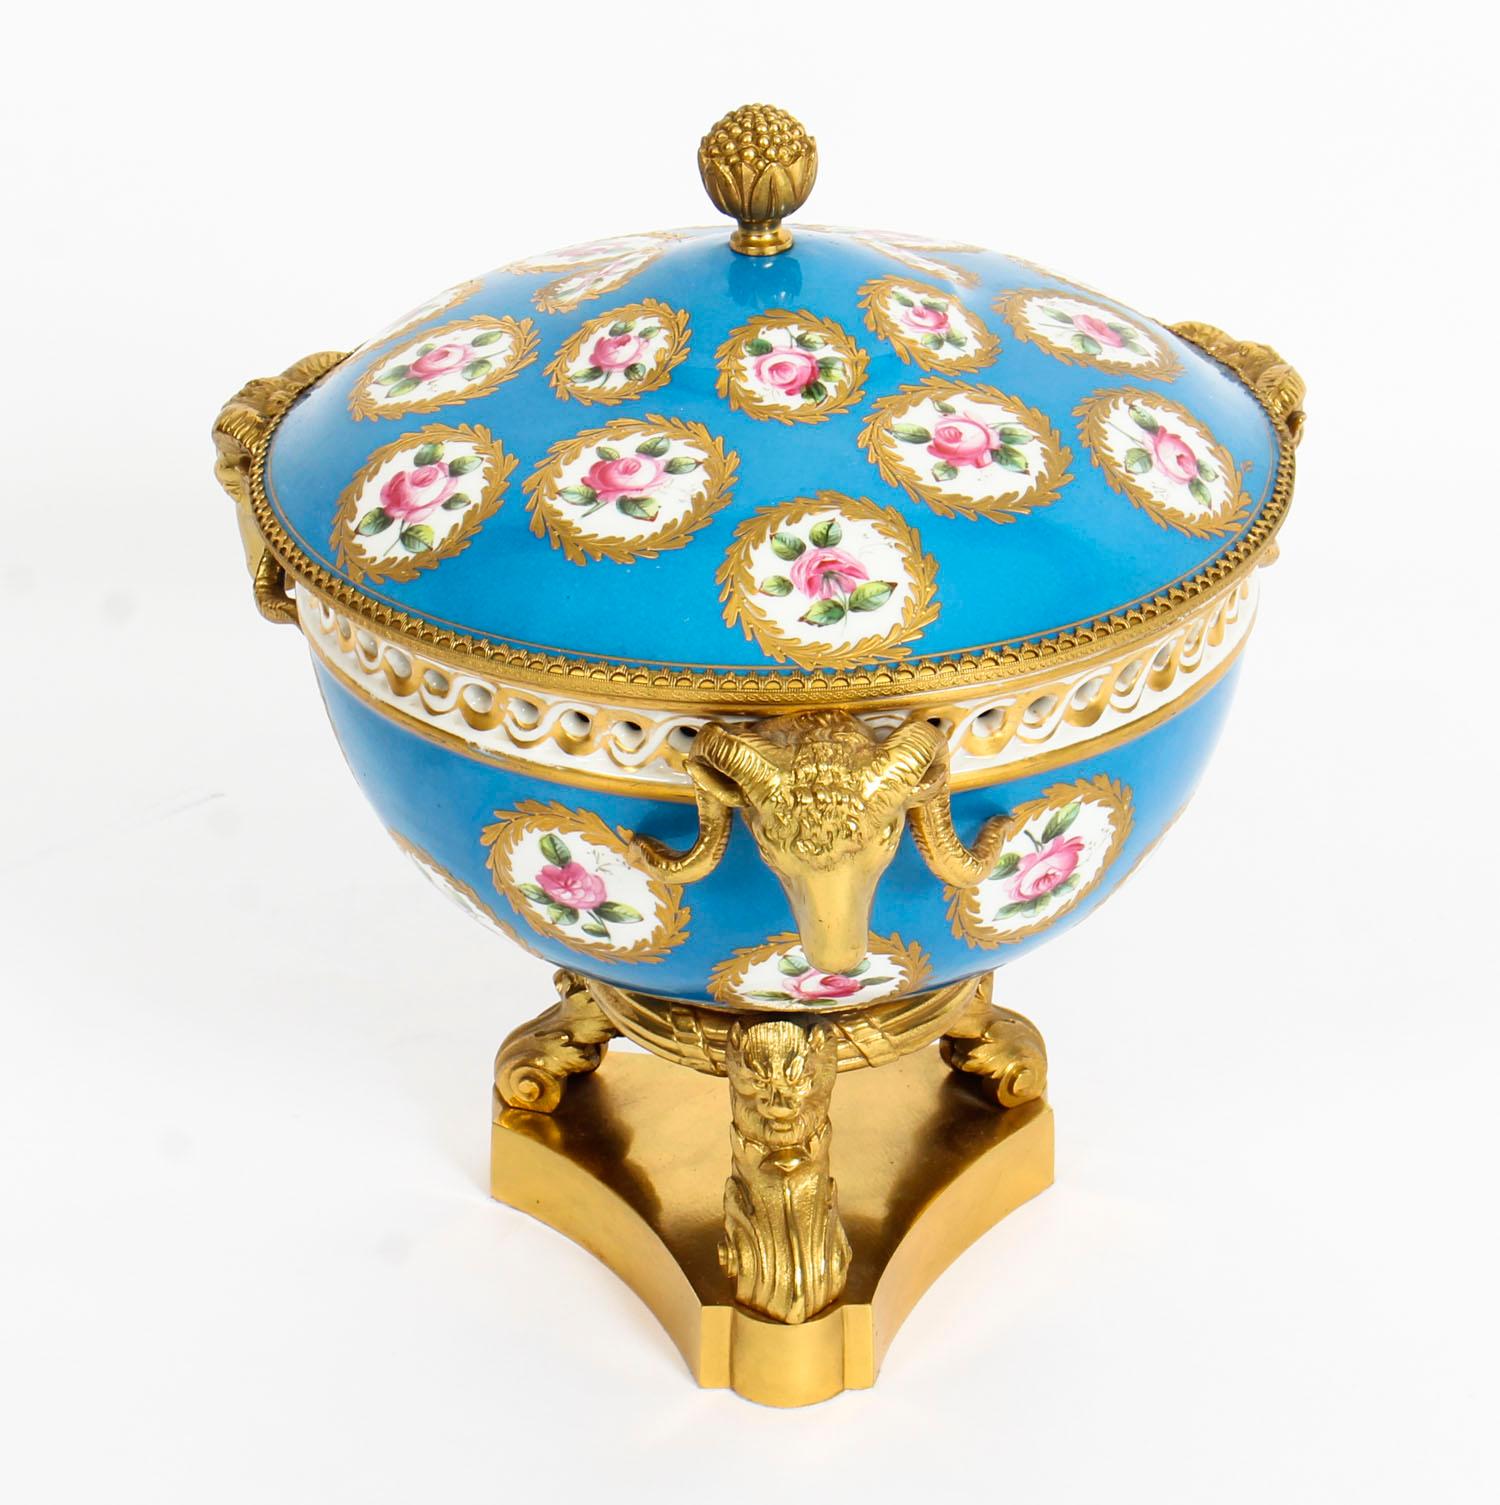 A beautiful superb quality antique ormolu-mounted Sevres 